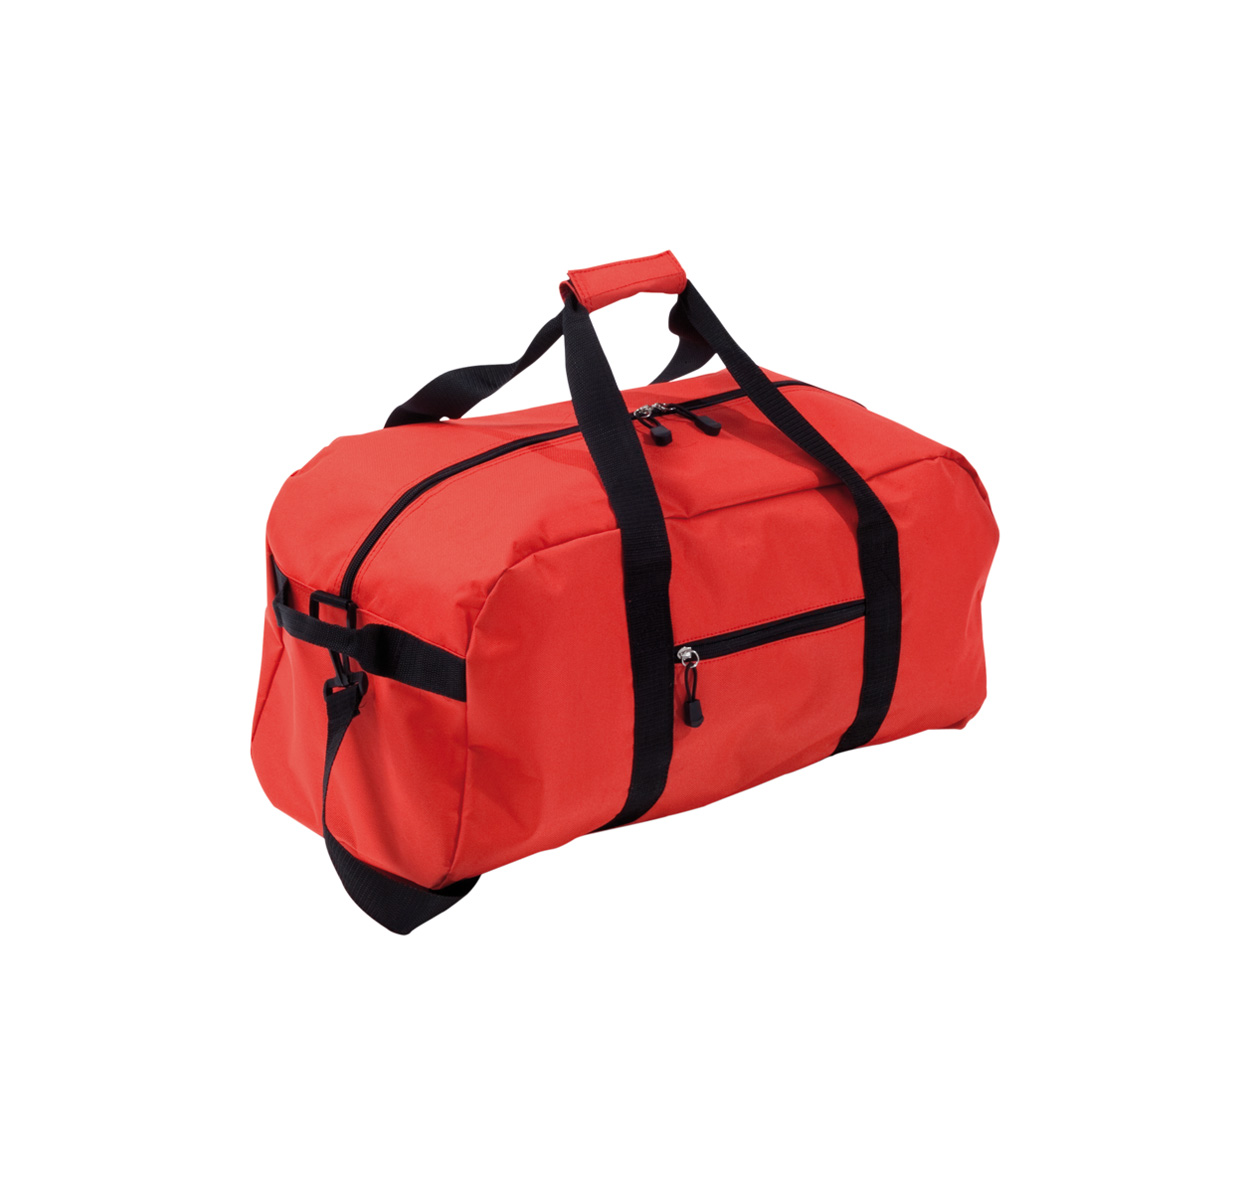 Drako sportsk torba za rame od poliestera, crvene boje s logom firme 